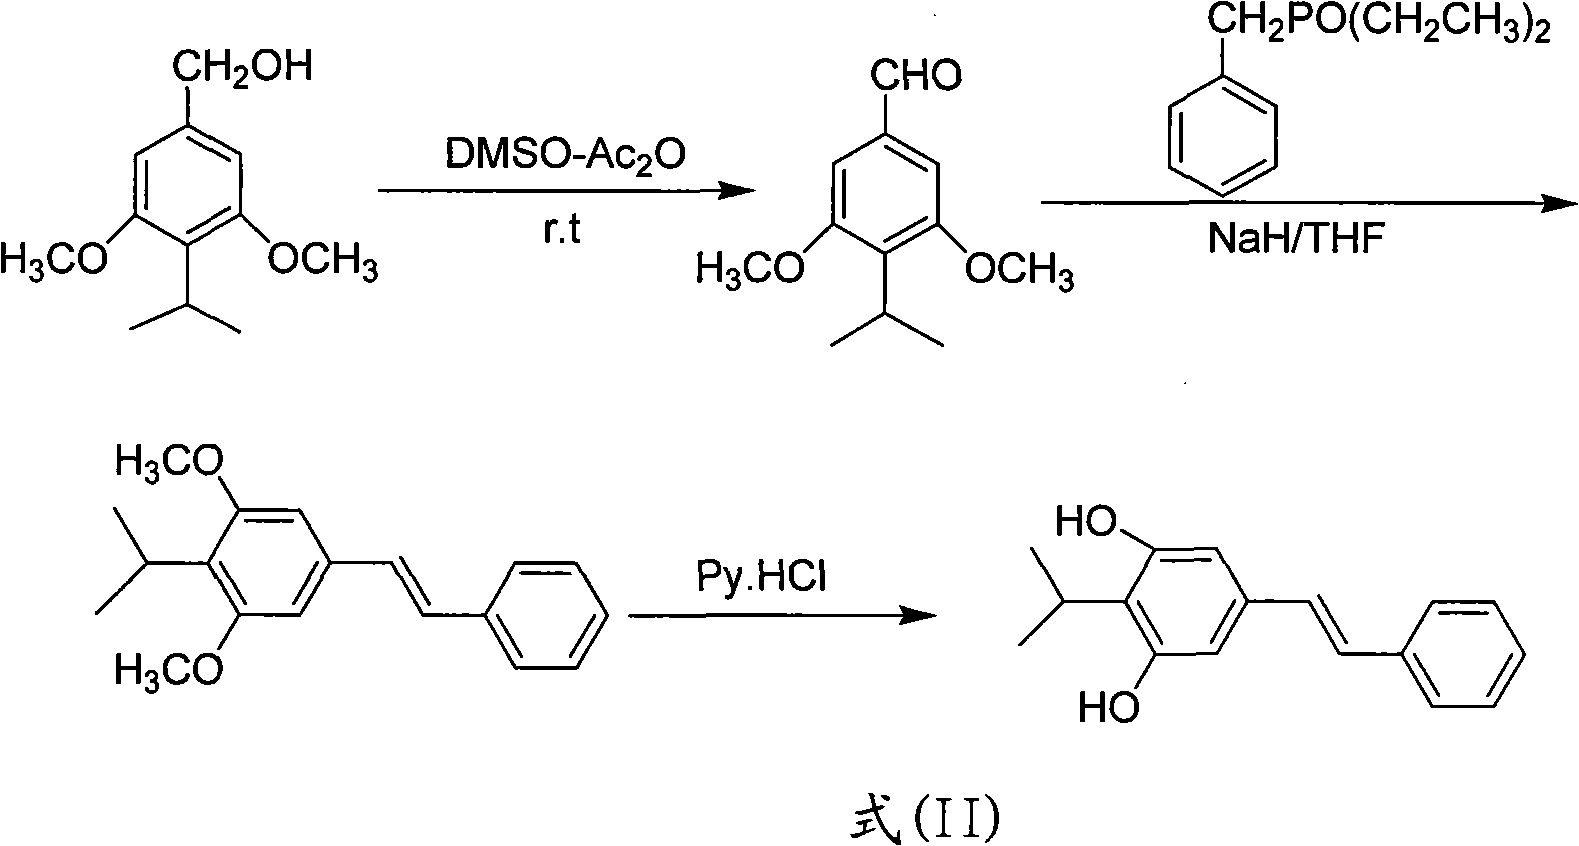 Method for synthesizing Stilbene compound by utilizing Pfitzner-moffatt oxidizing reaction